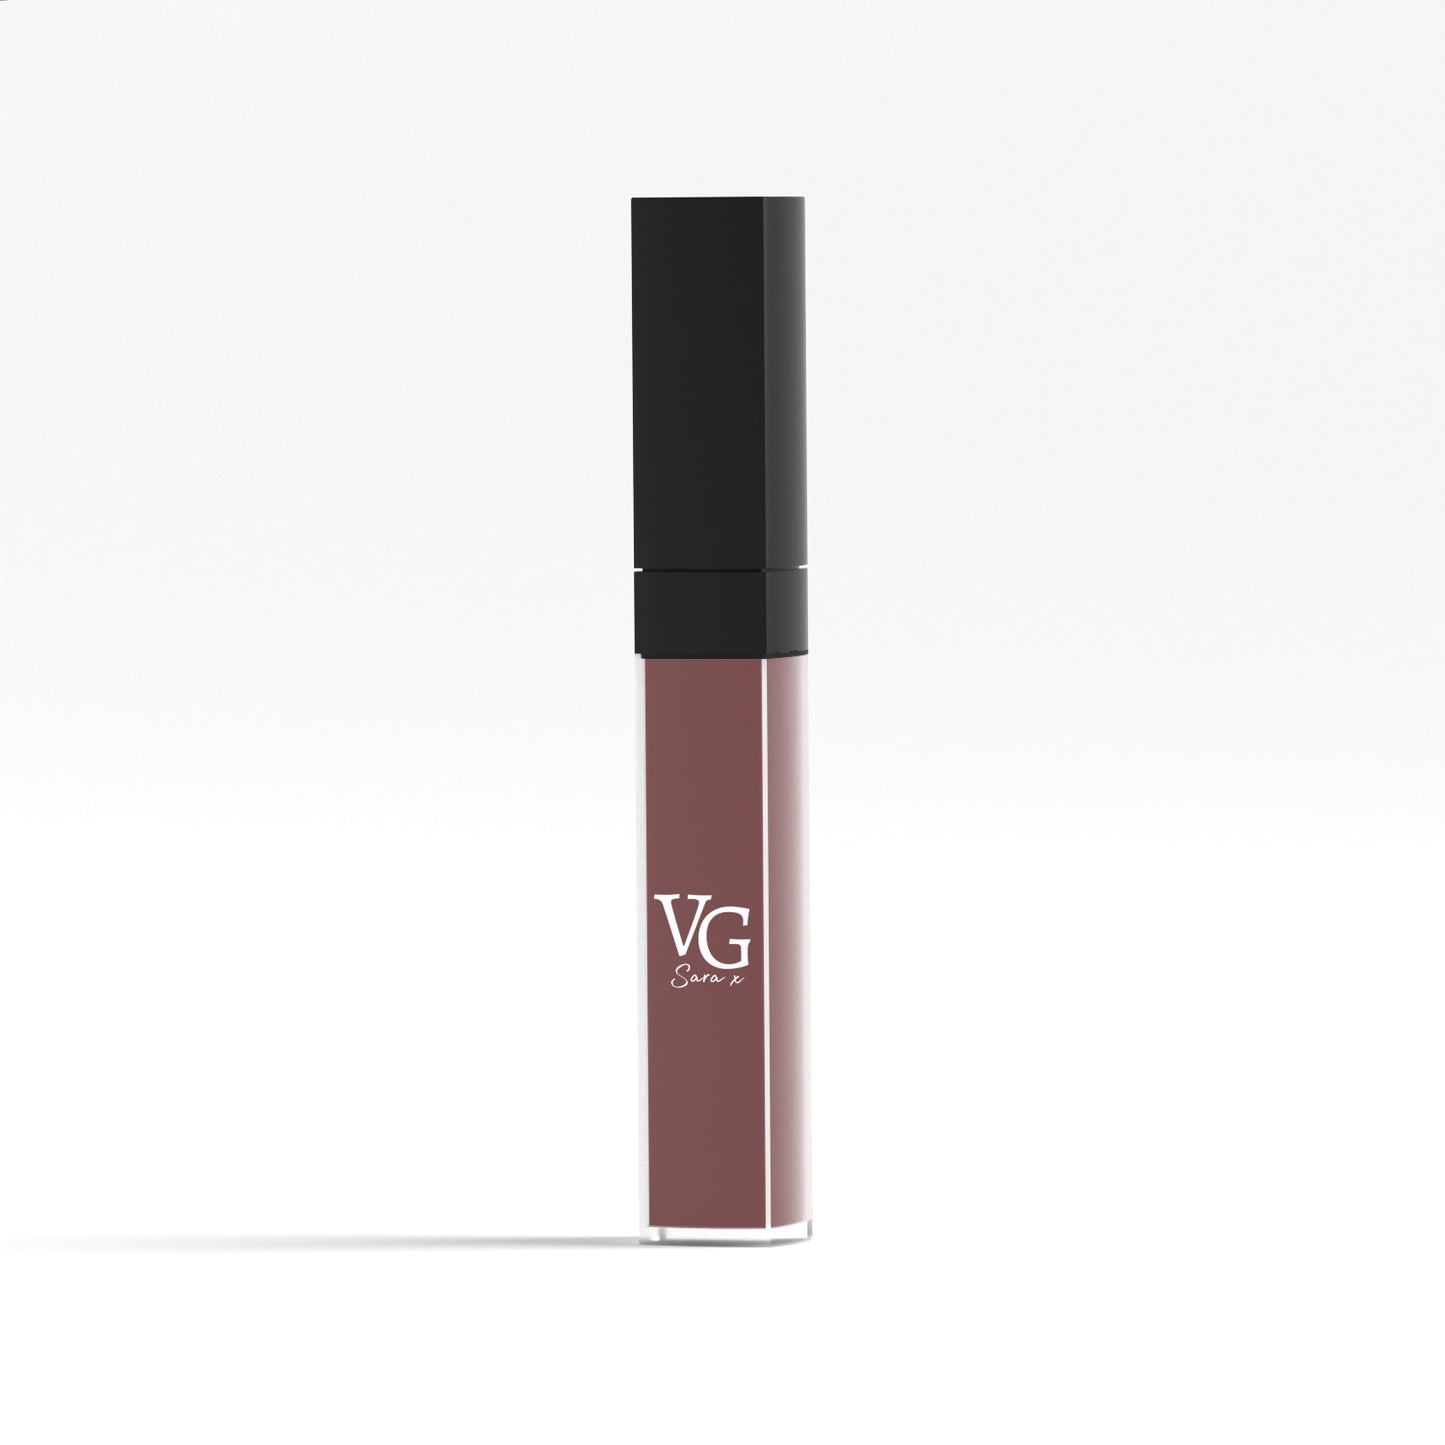 VG-branded vegan liquid lipstick in a light taupe hue